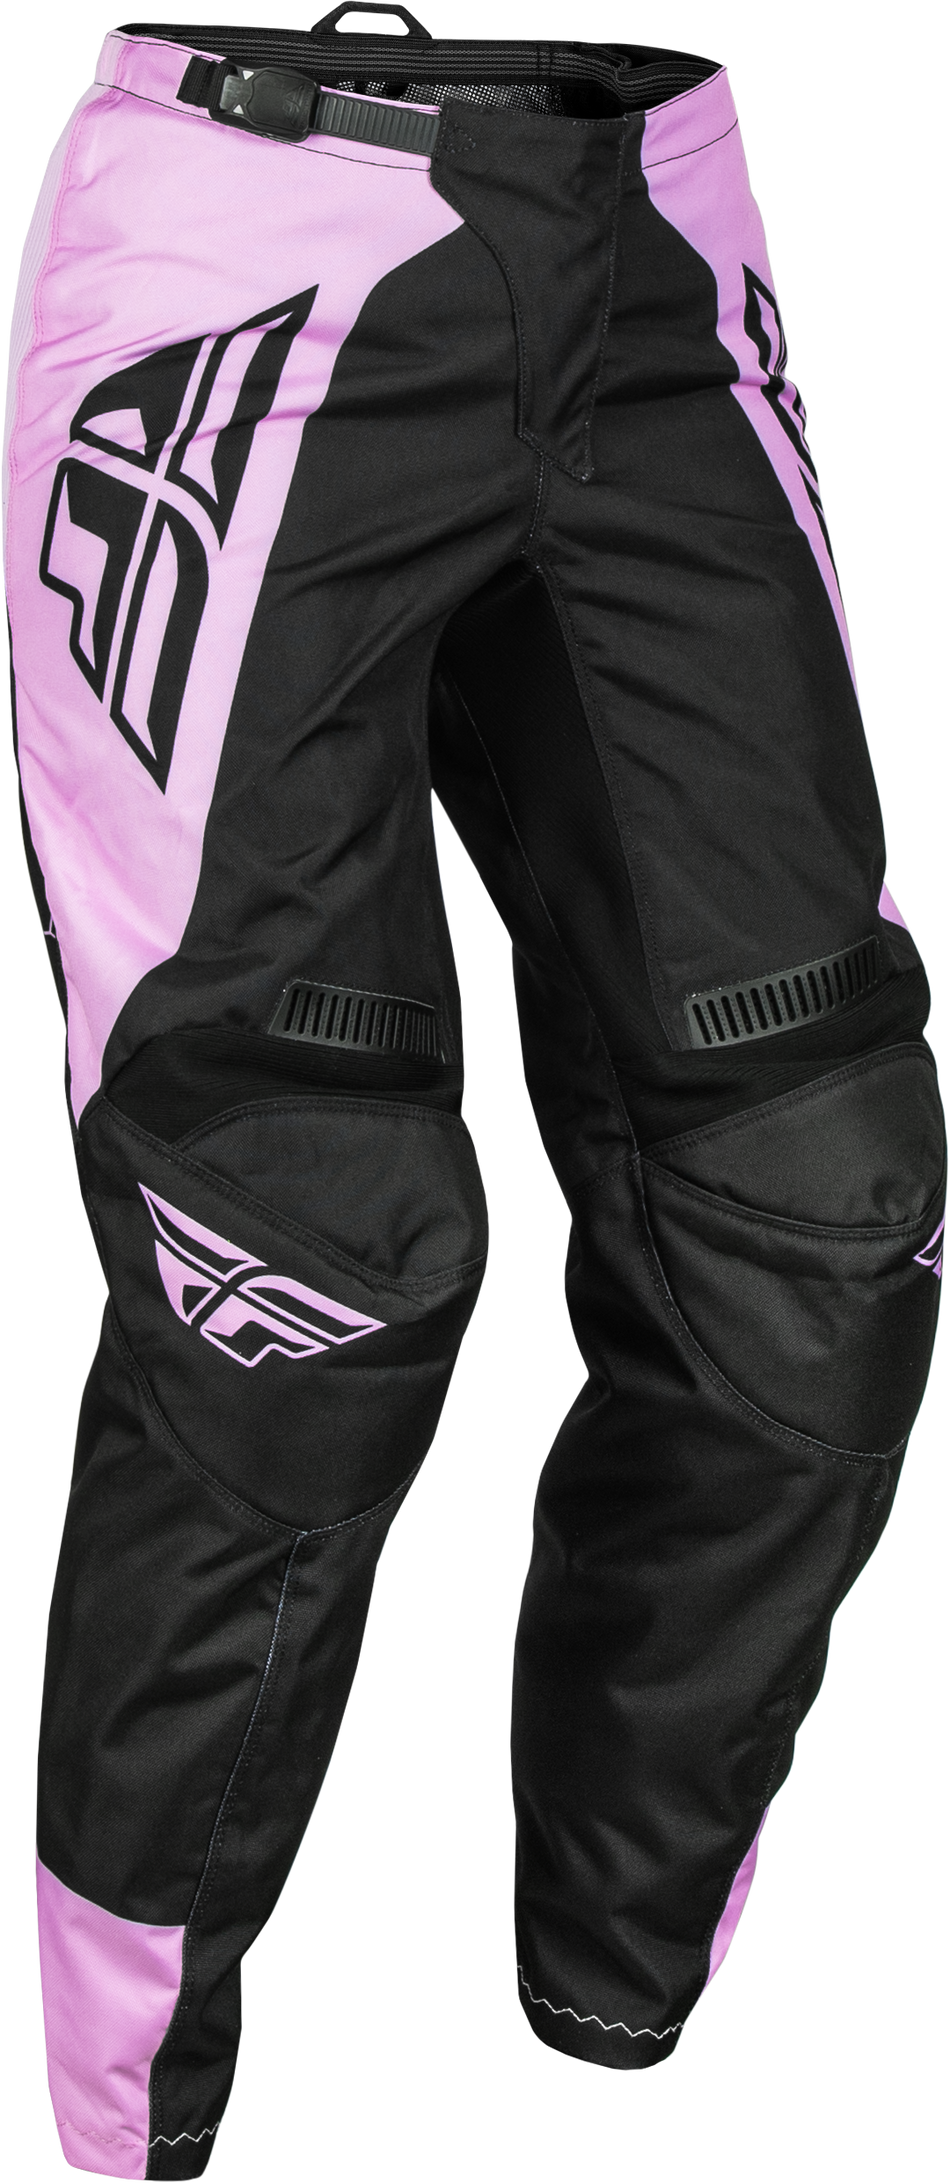 FLY RACING Women's F-16 Pants Black/Lavender Sz 05/06 377-83105